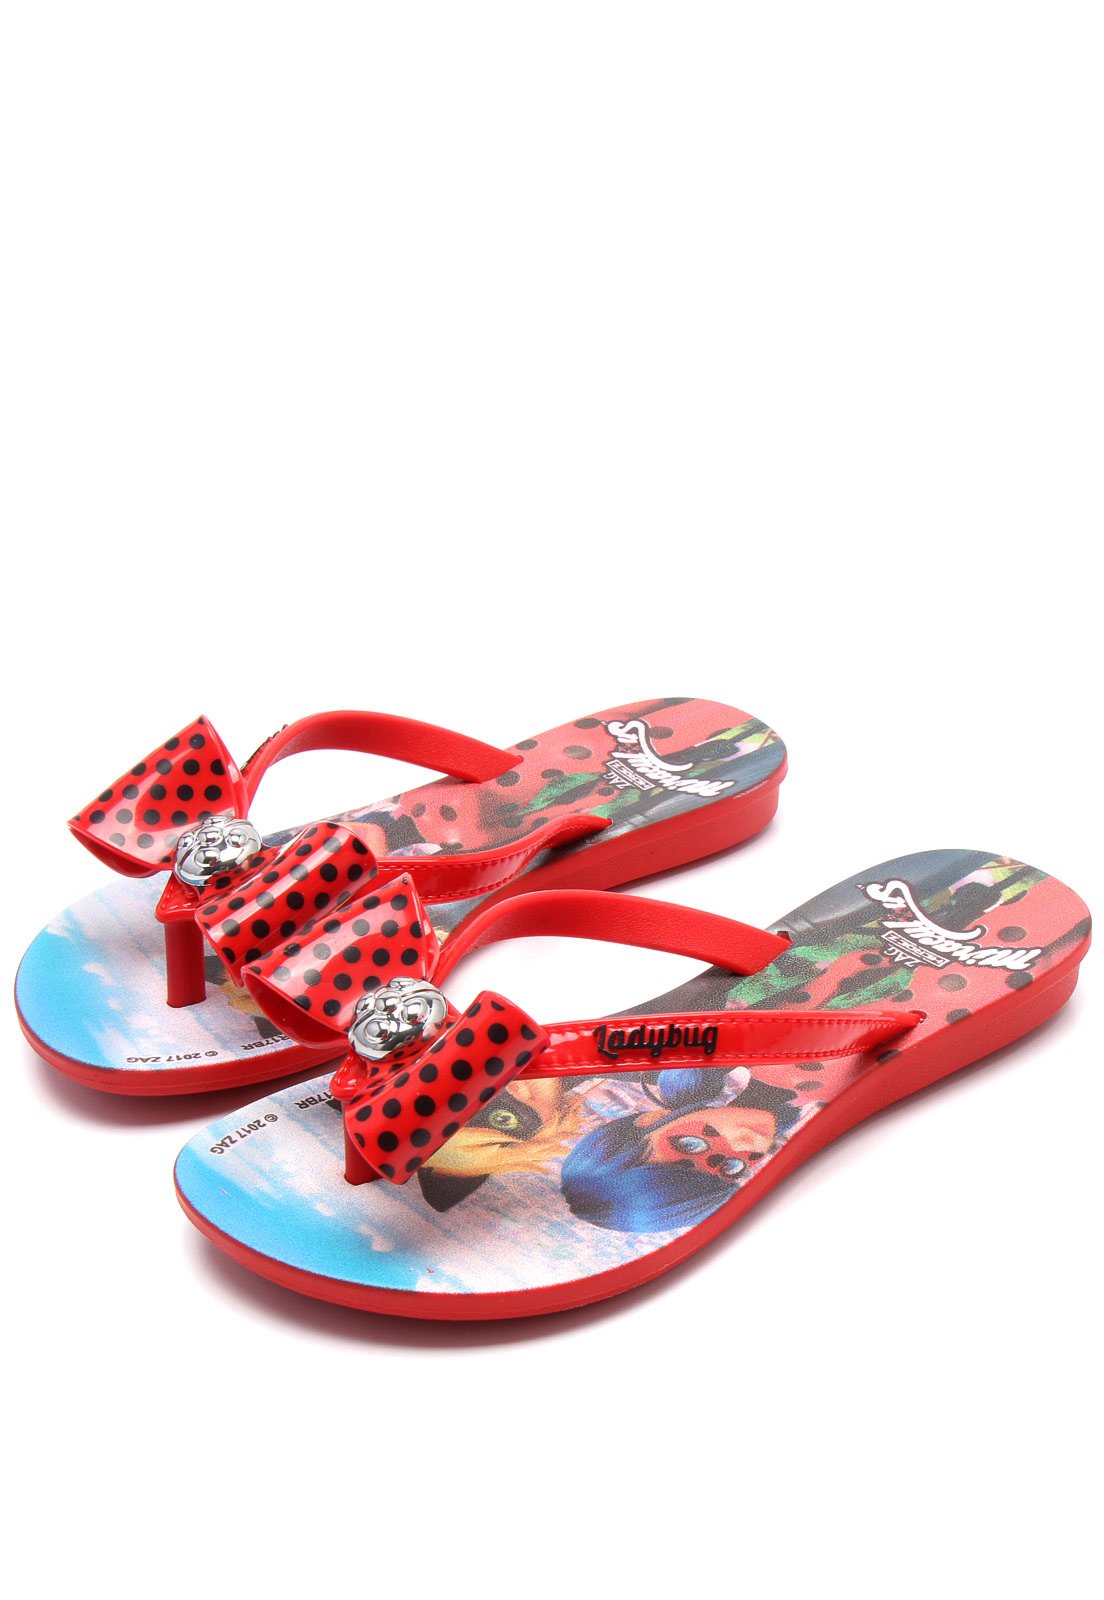 a sandália da ladybug